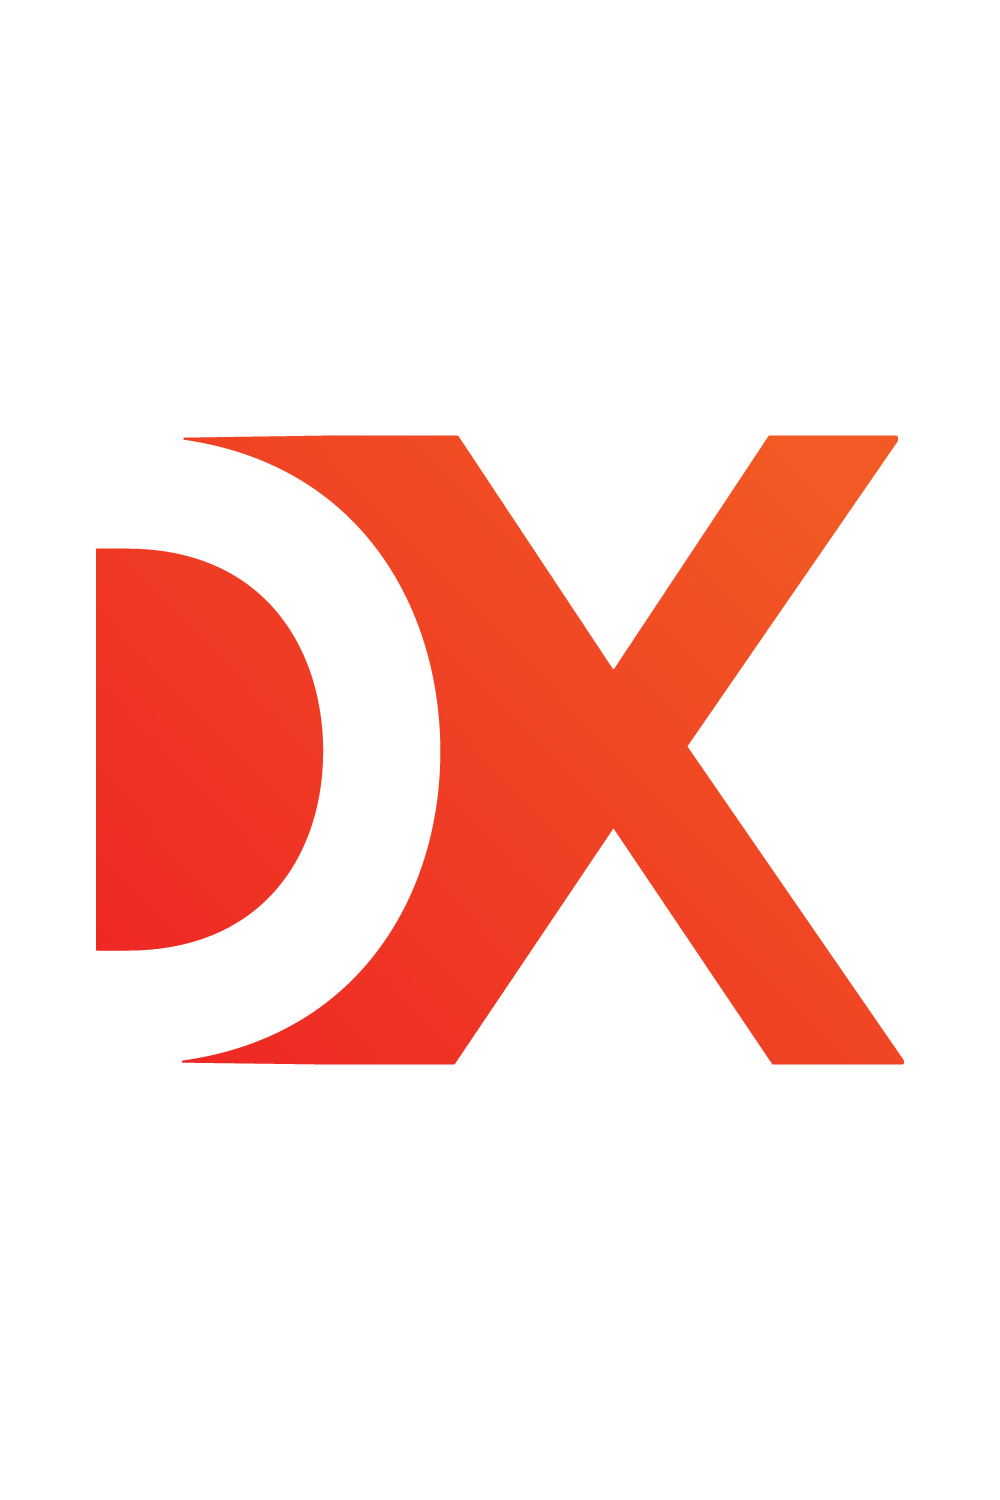 Initials DX letters logo design vector arts DX logo template orange and white color XD logo monogram best identity pinterest preview image.